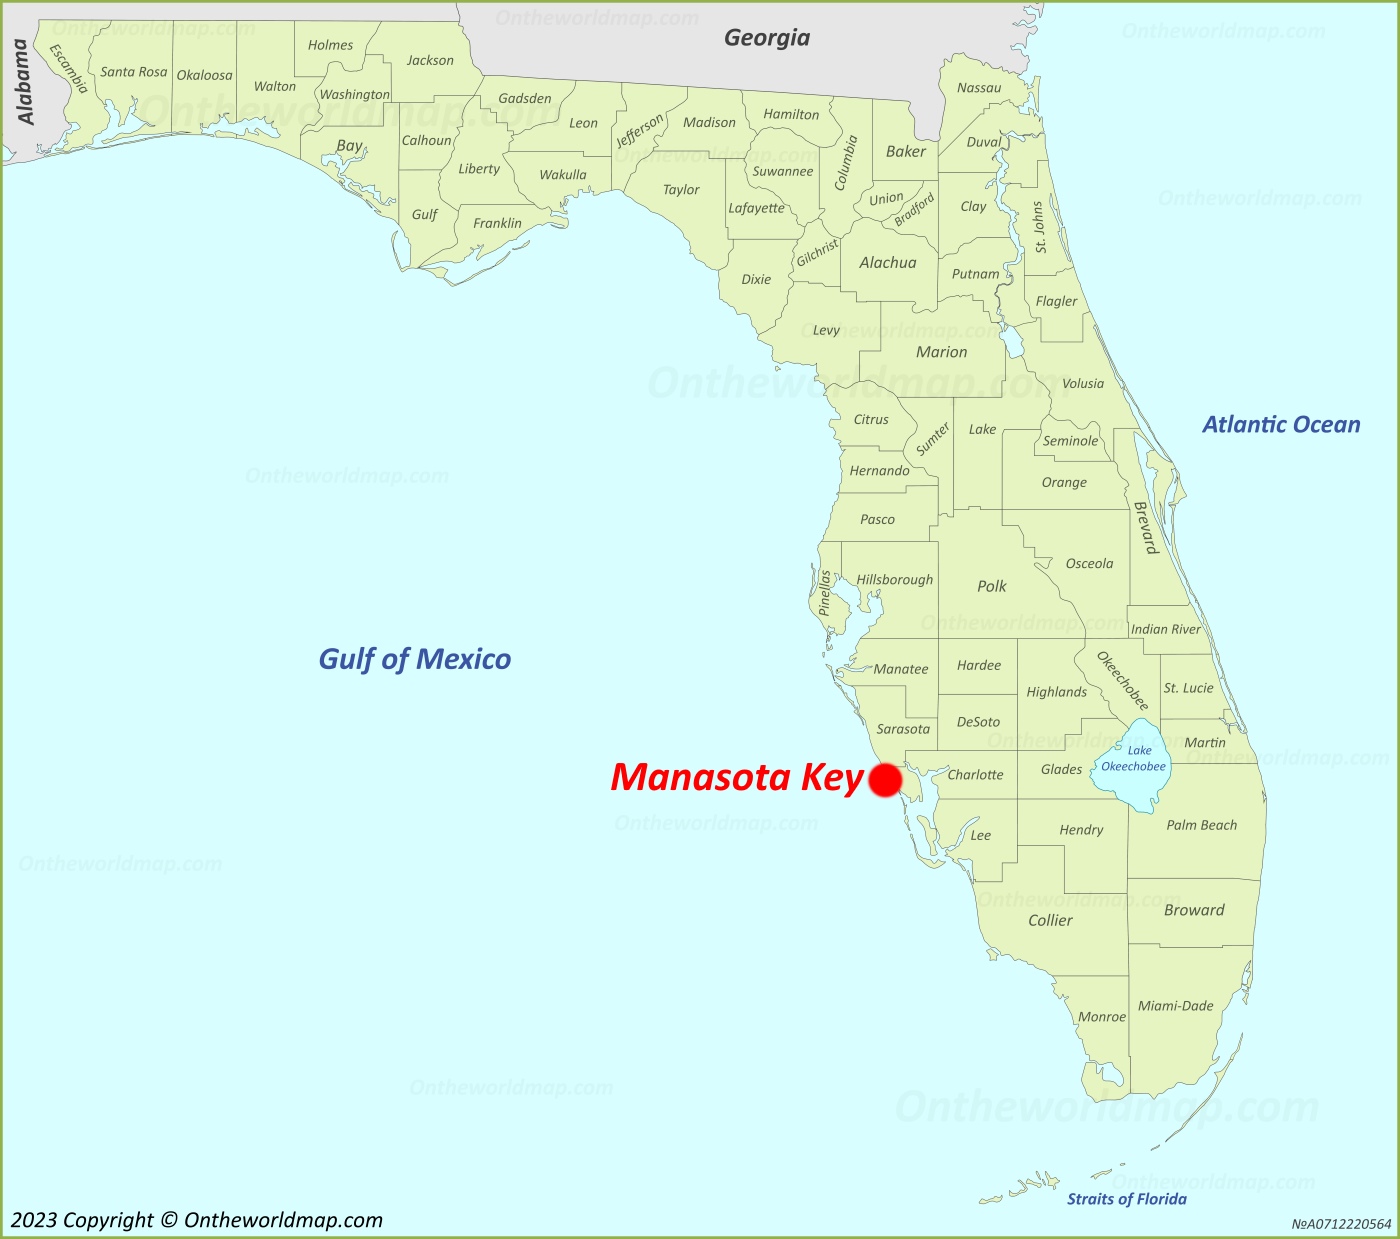 Manasota Key Location On The Florida Map